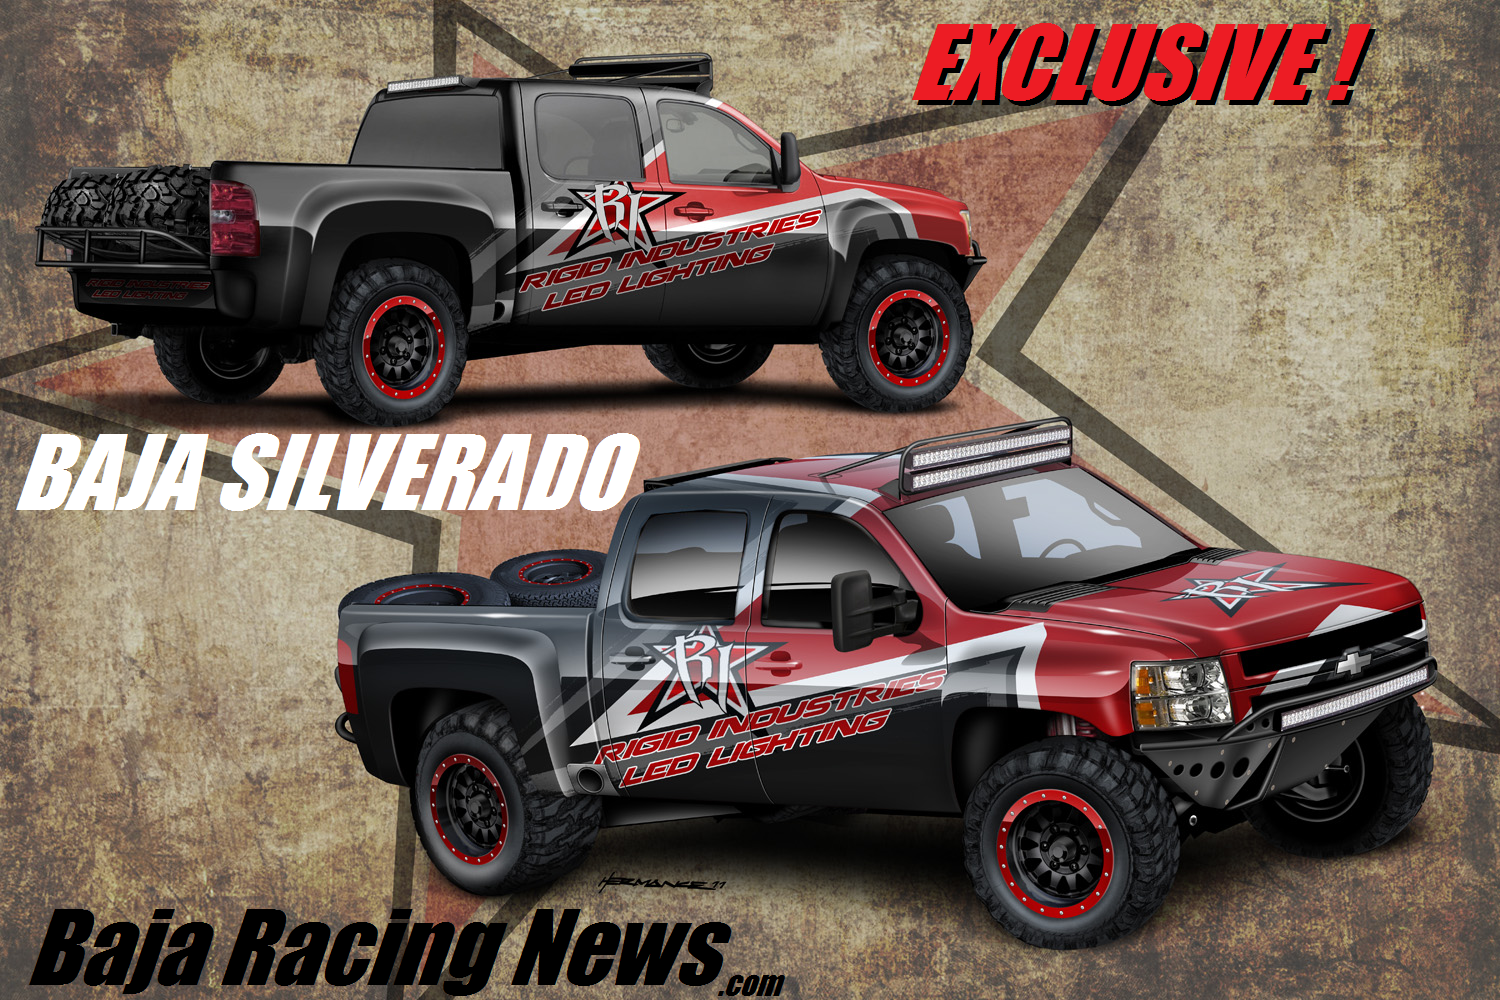 Baja Racing News LIVE!: BAJA SILVERADO! Baja Racing News LIVE! EXCLUSIVE!